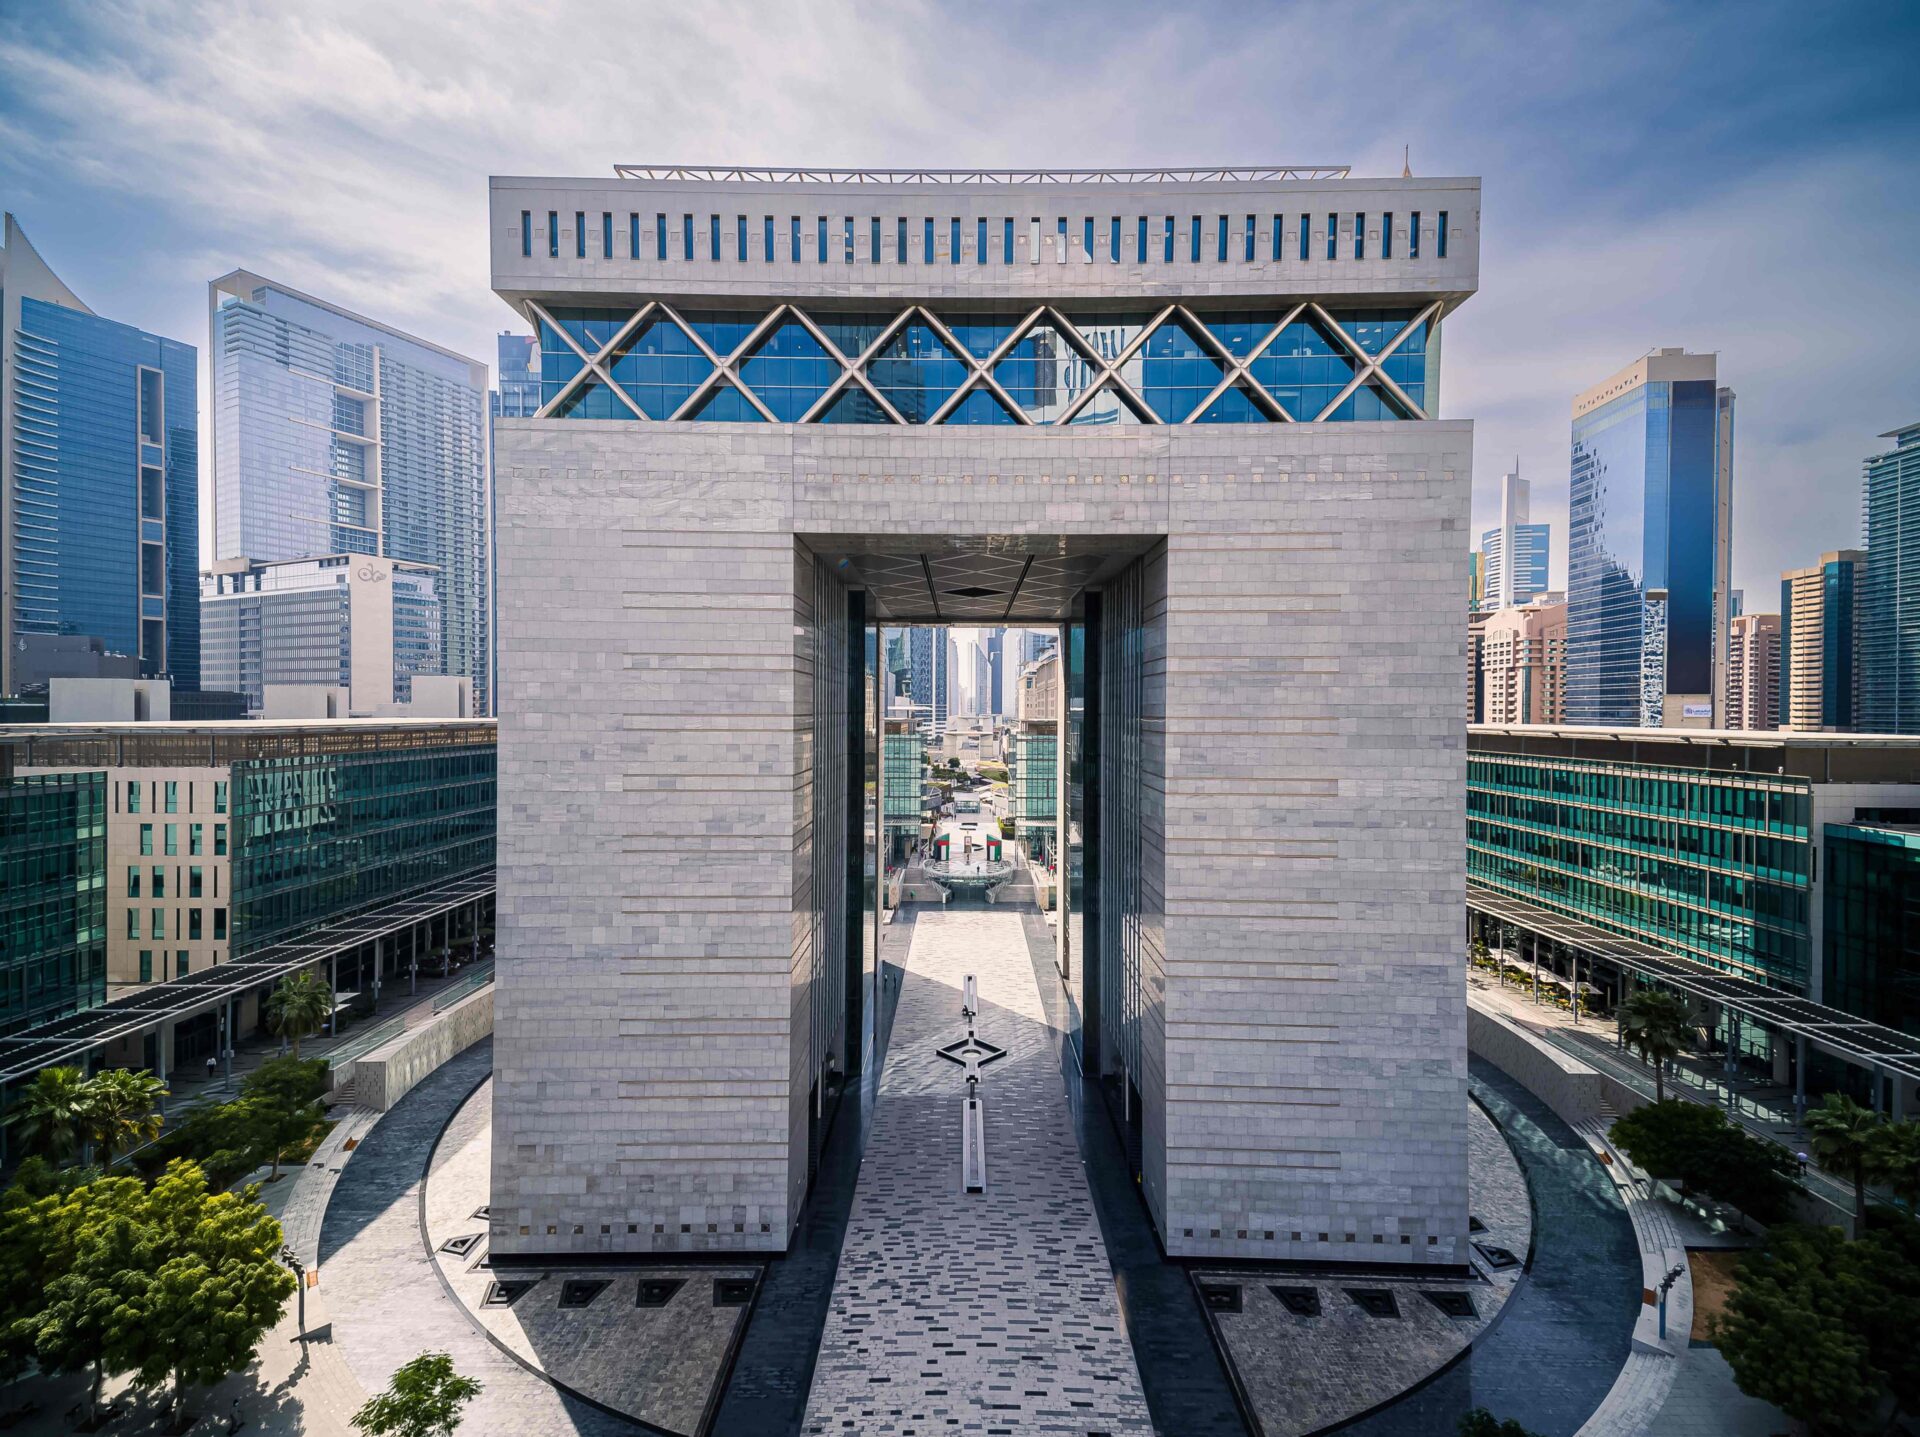 The Dubai International Financial Center